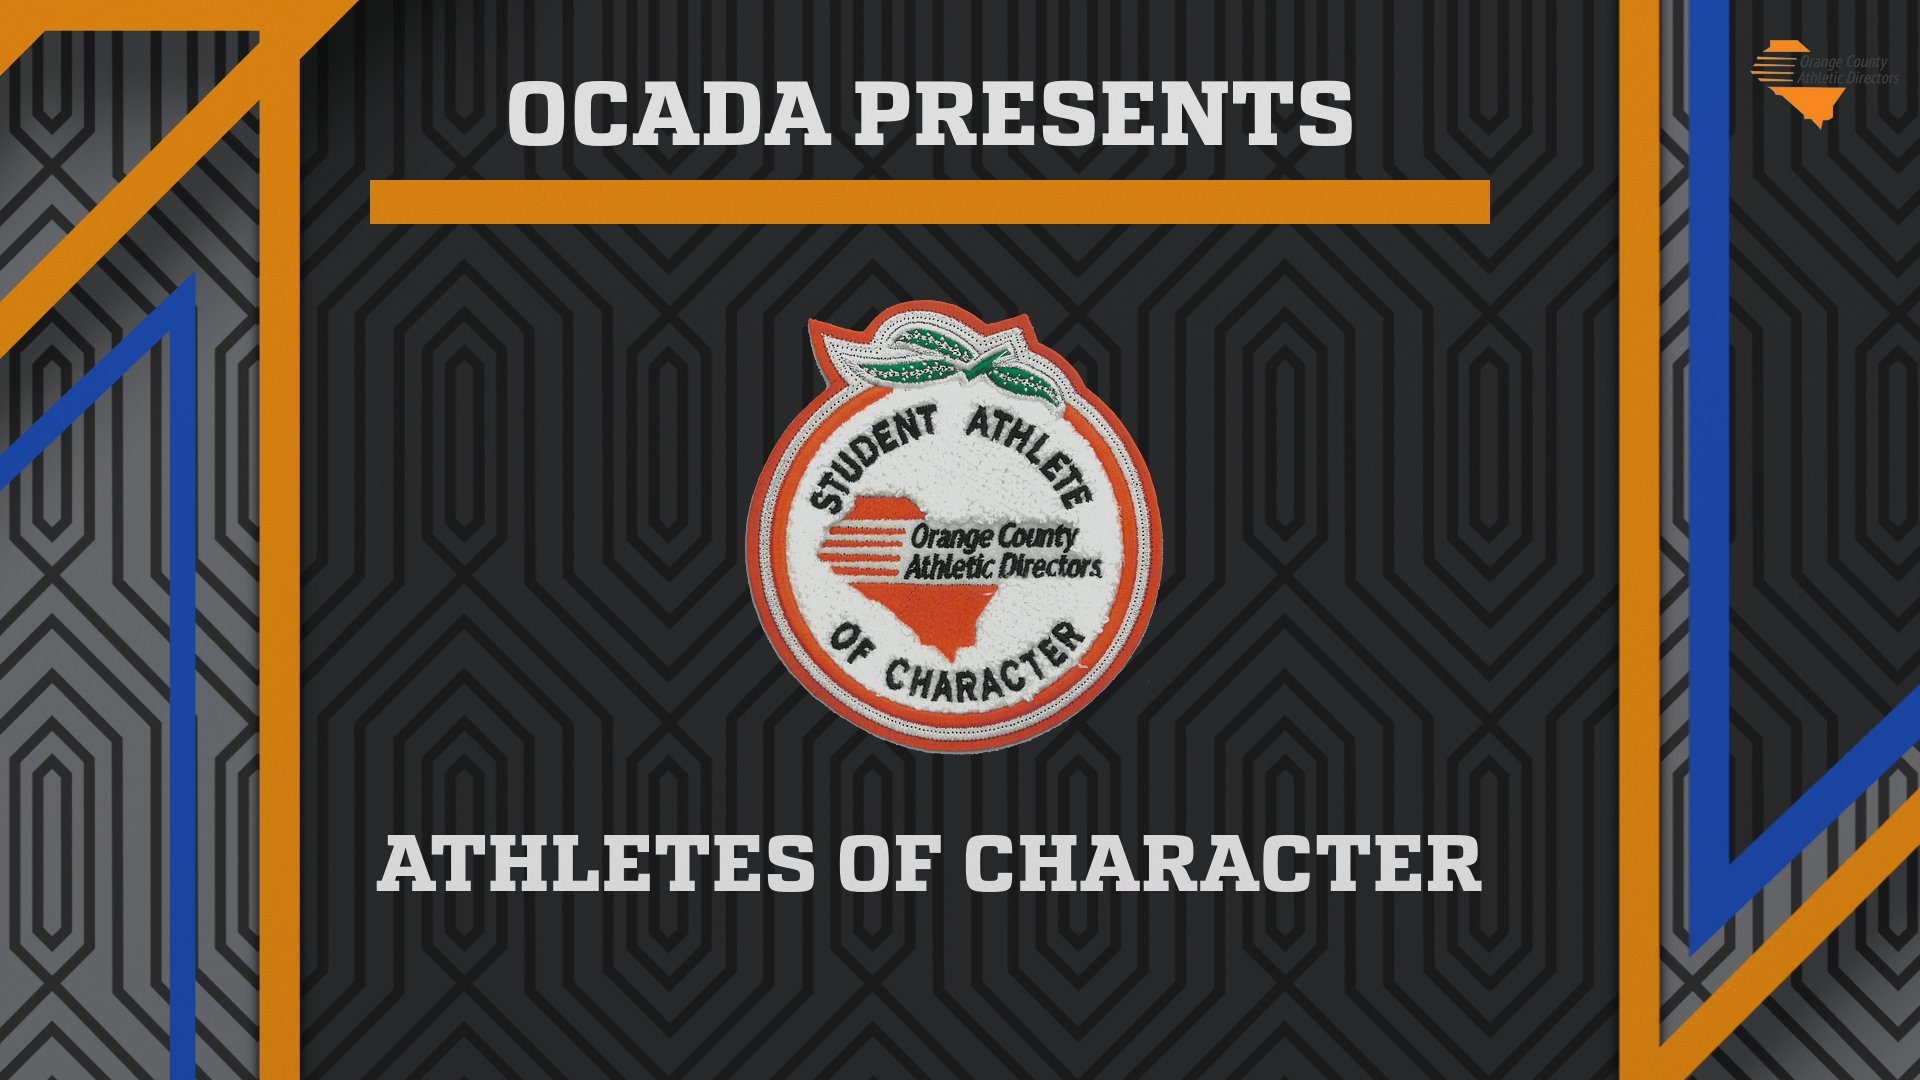 Orange County Athletic Directors Association